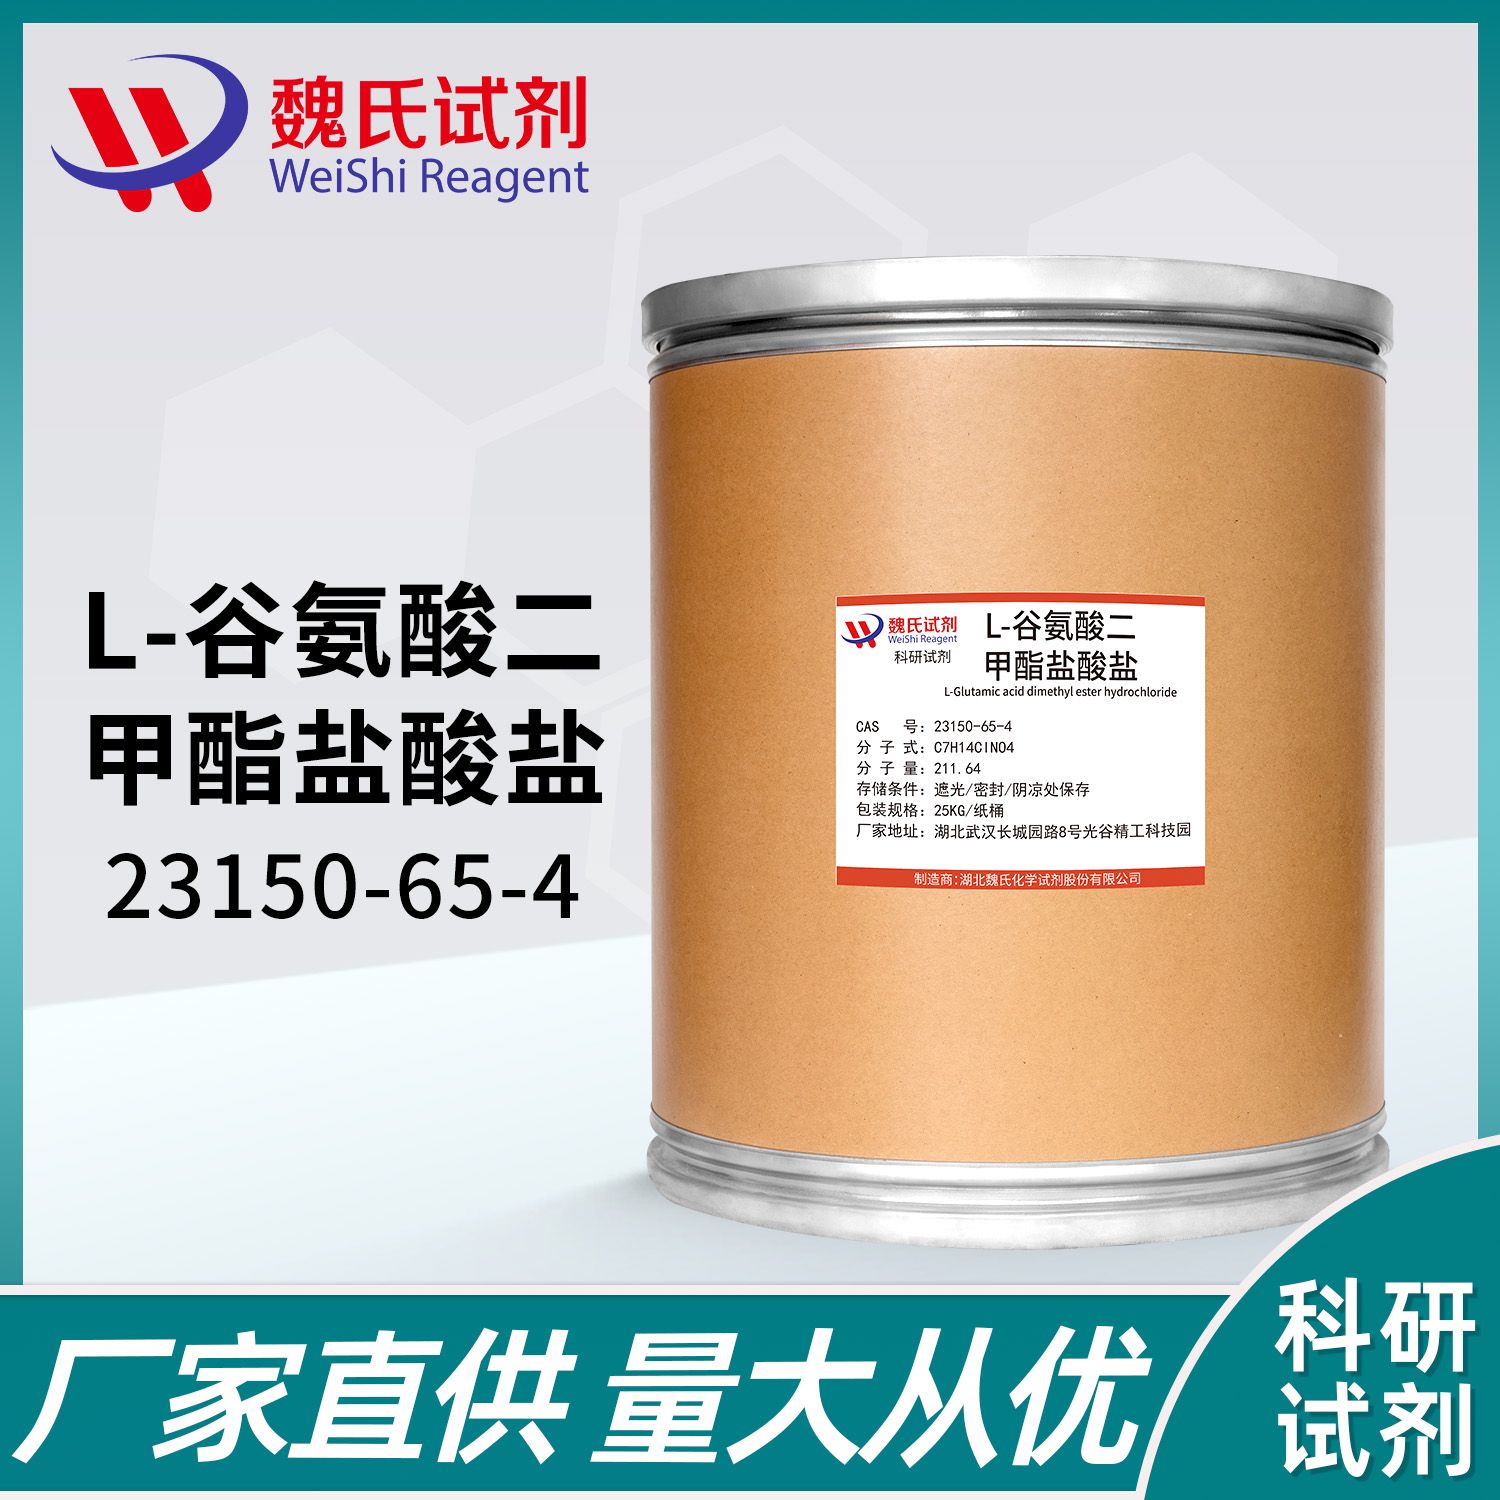 L-谷氨酸二甲酯盐酸盐—23150-65-4